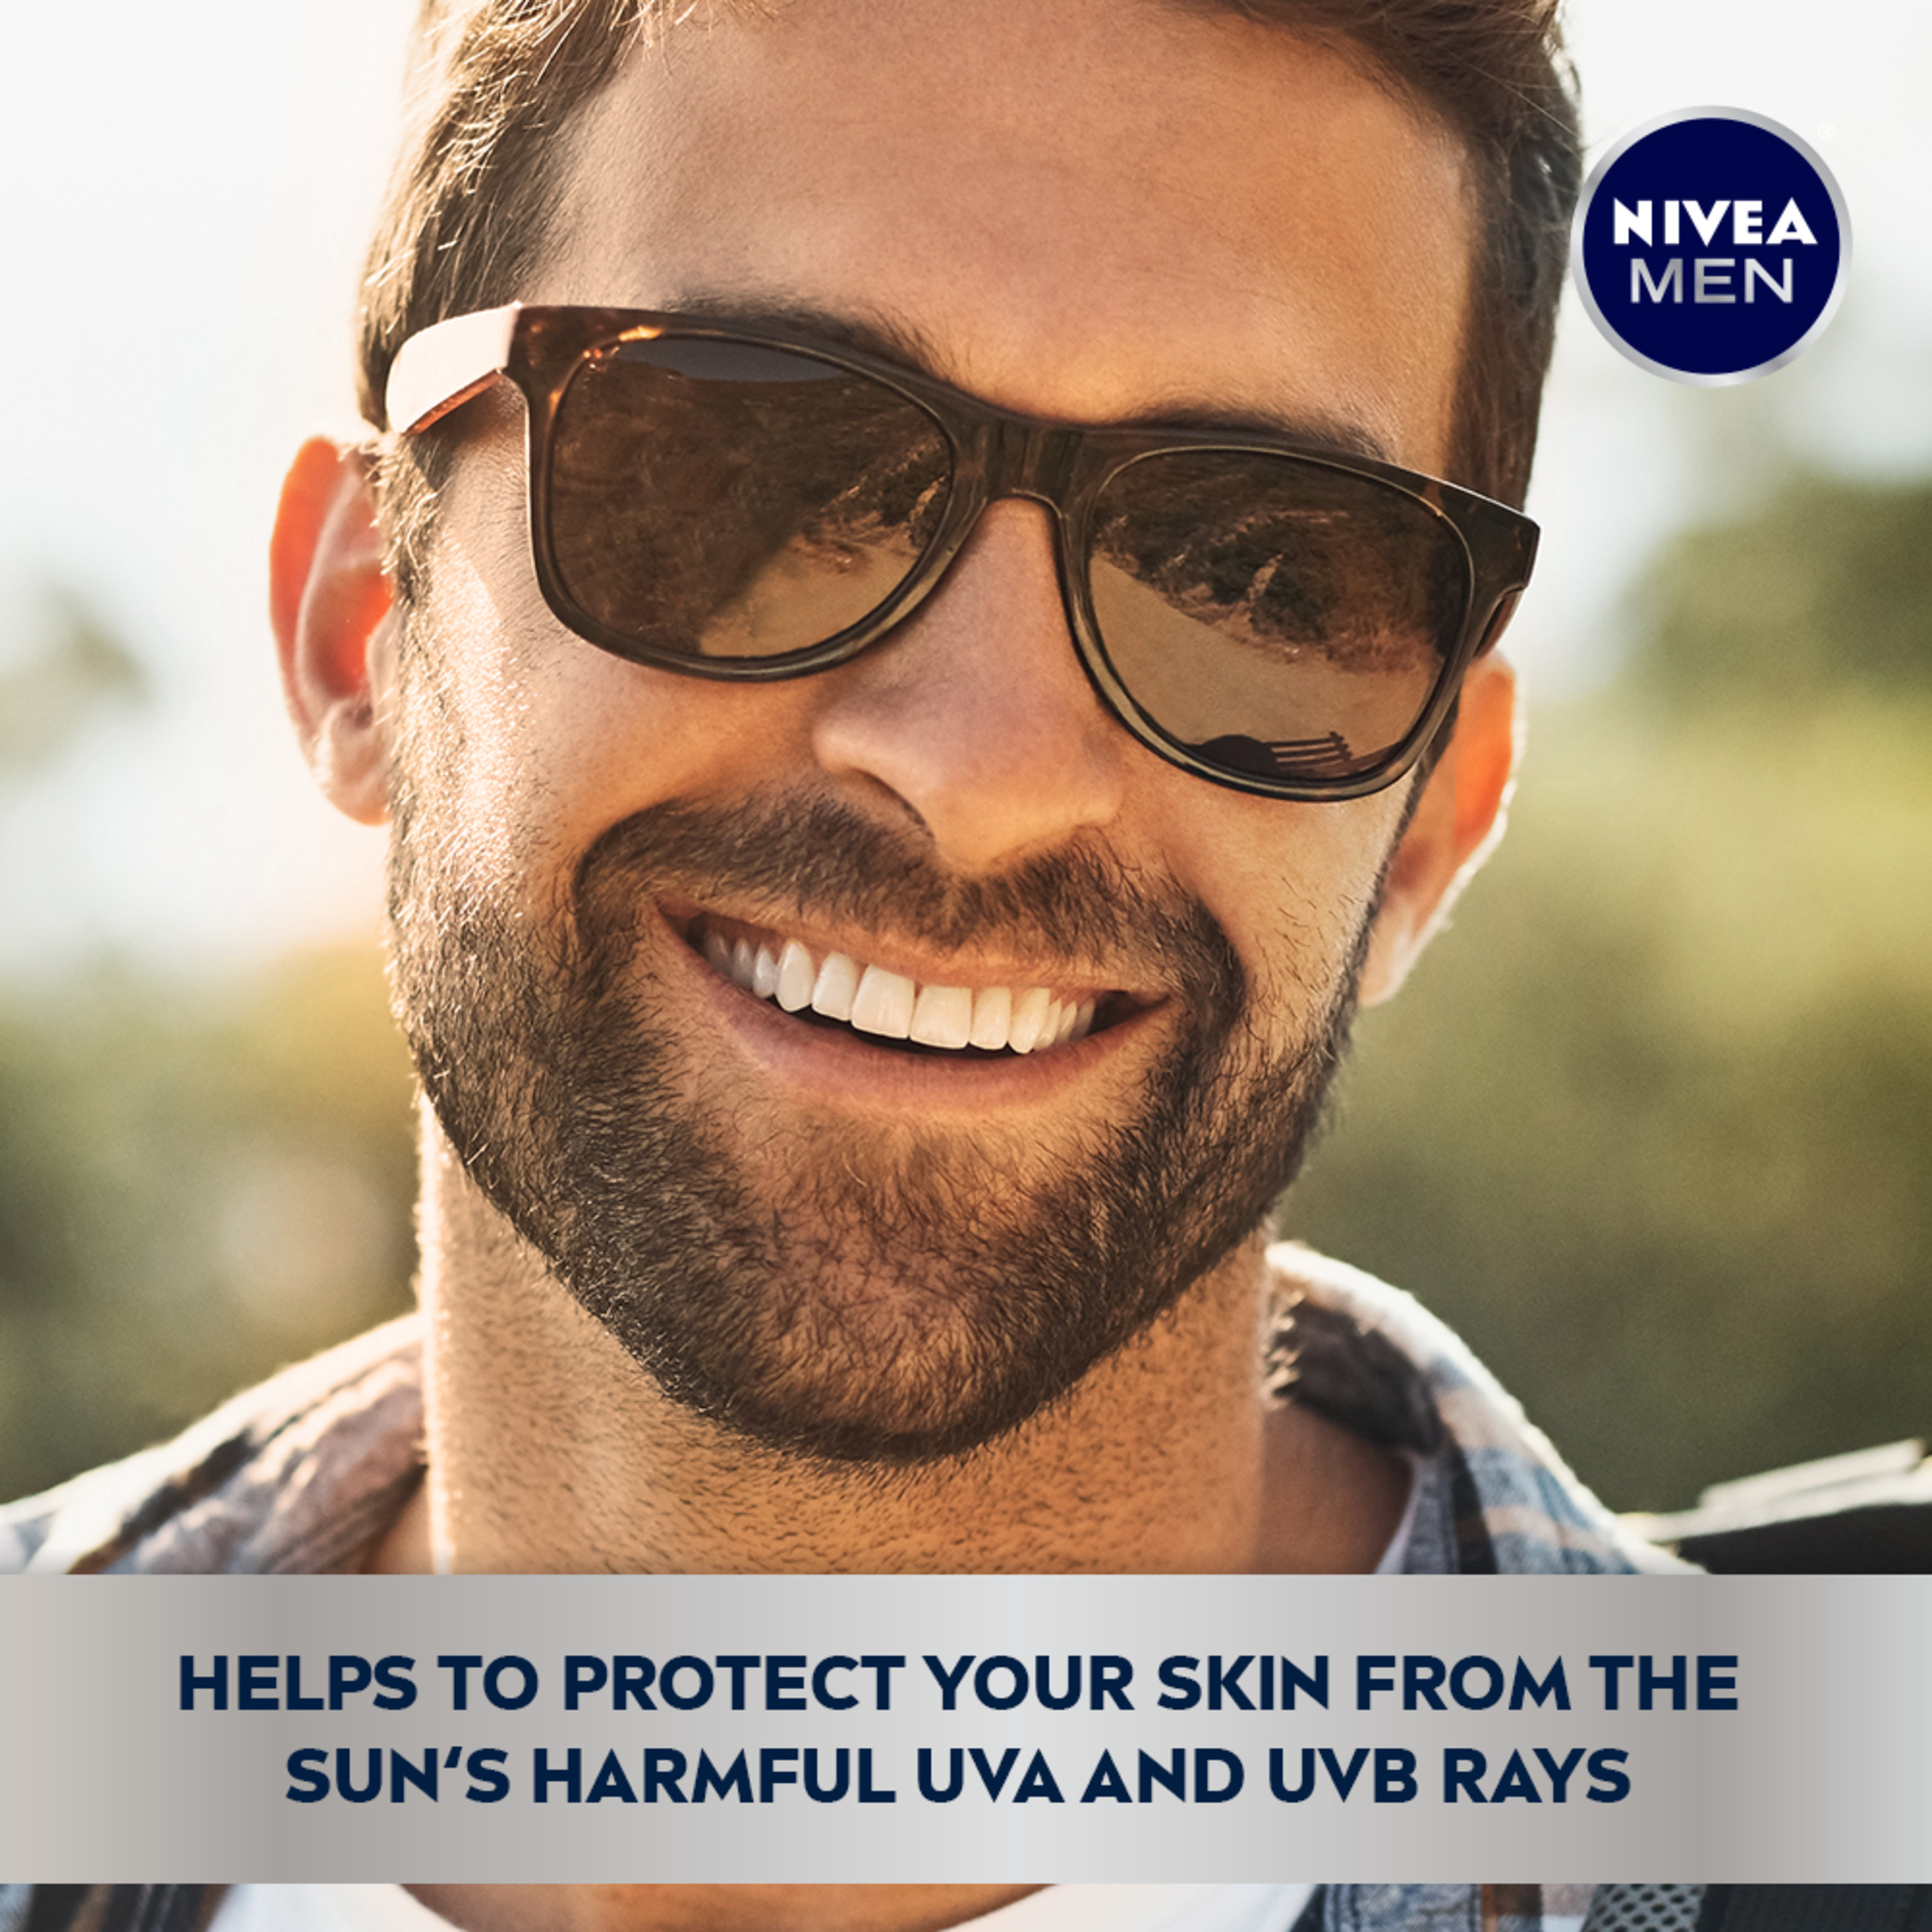 NIVEA MEN Maximum Hydration Face Lotion with Broad Spectrum SPF 15 Sunscreen, 2.5 Fl Oz Tube - image 4 of 8